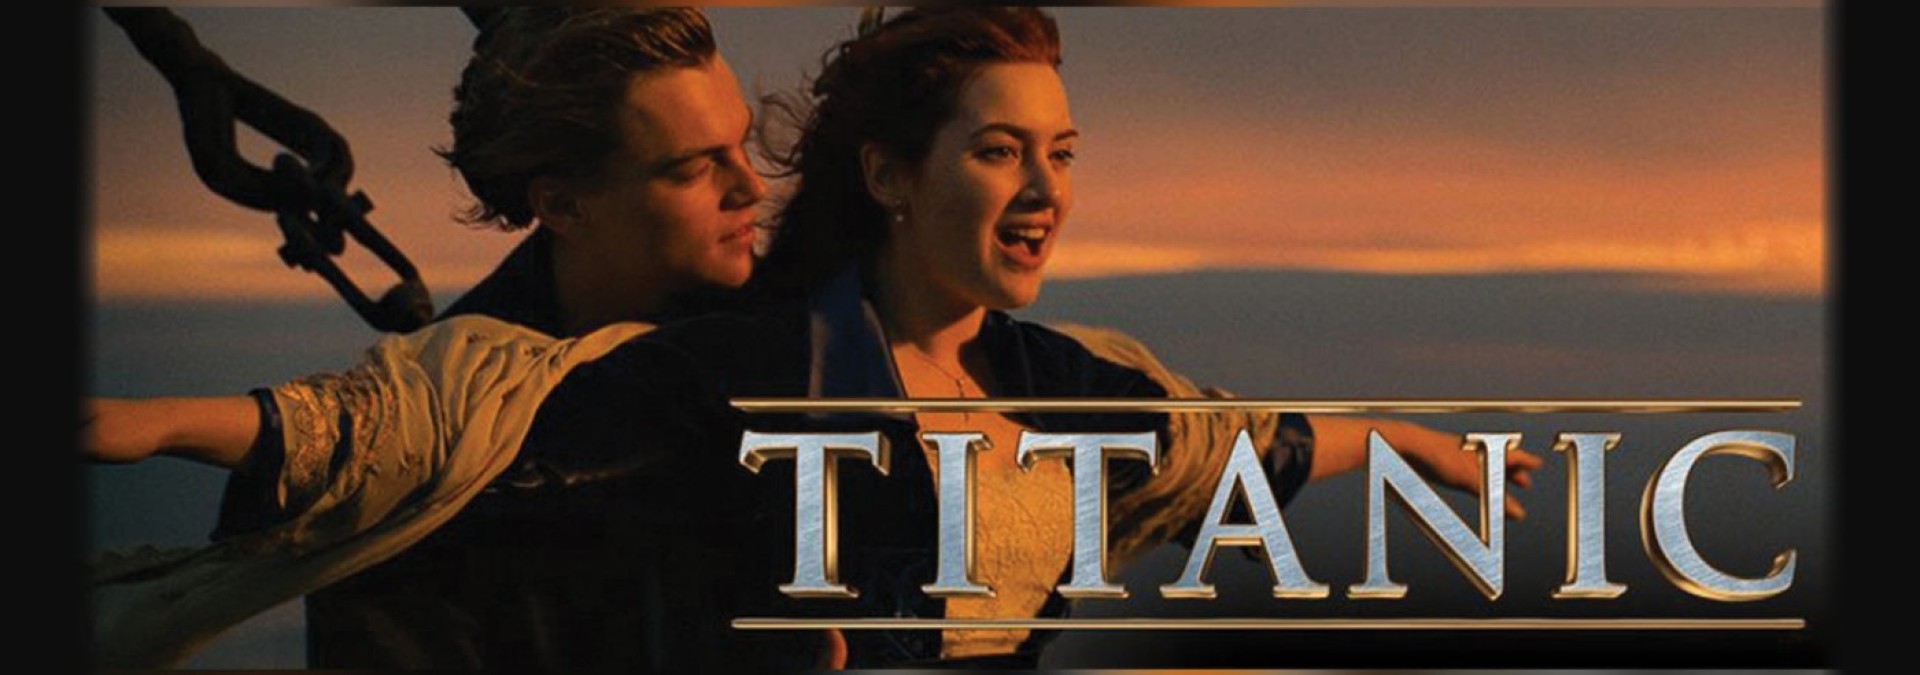 EventTicket Website Titanic